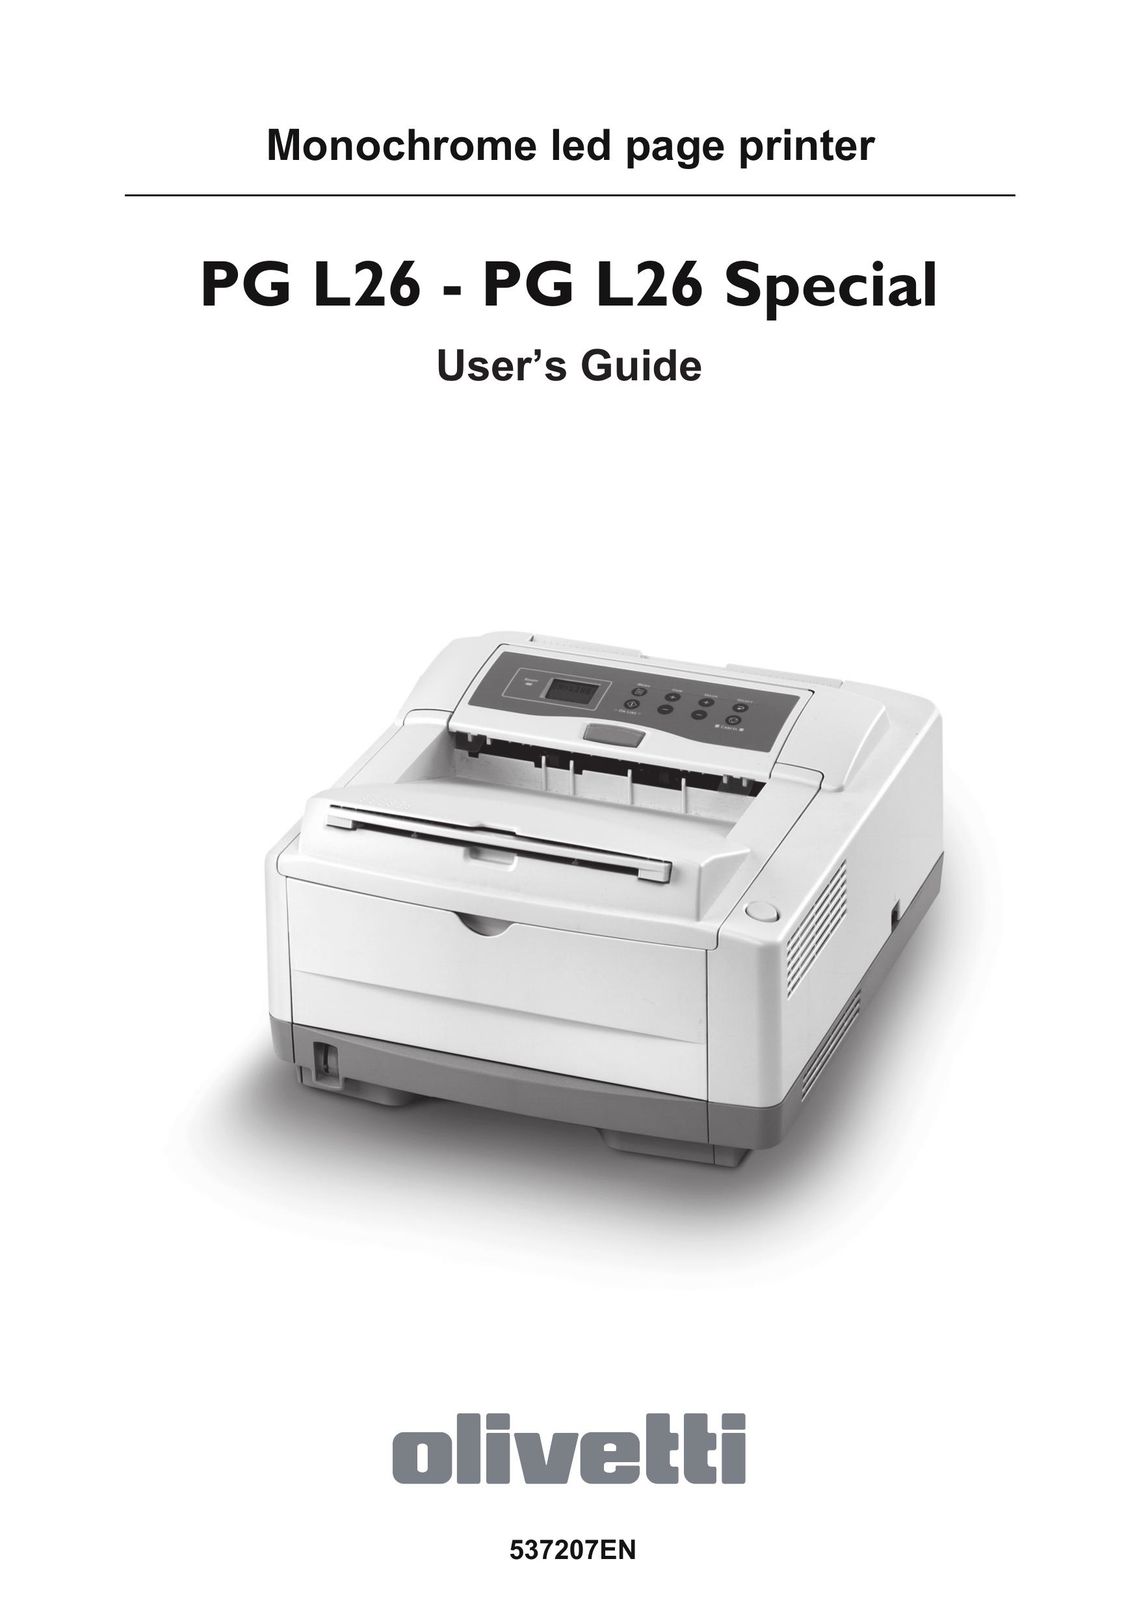 Olivetti PG L26 Special Printer User Manual